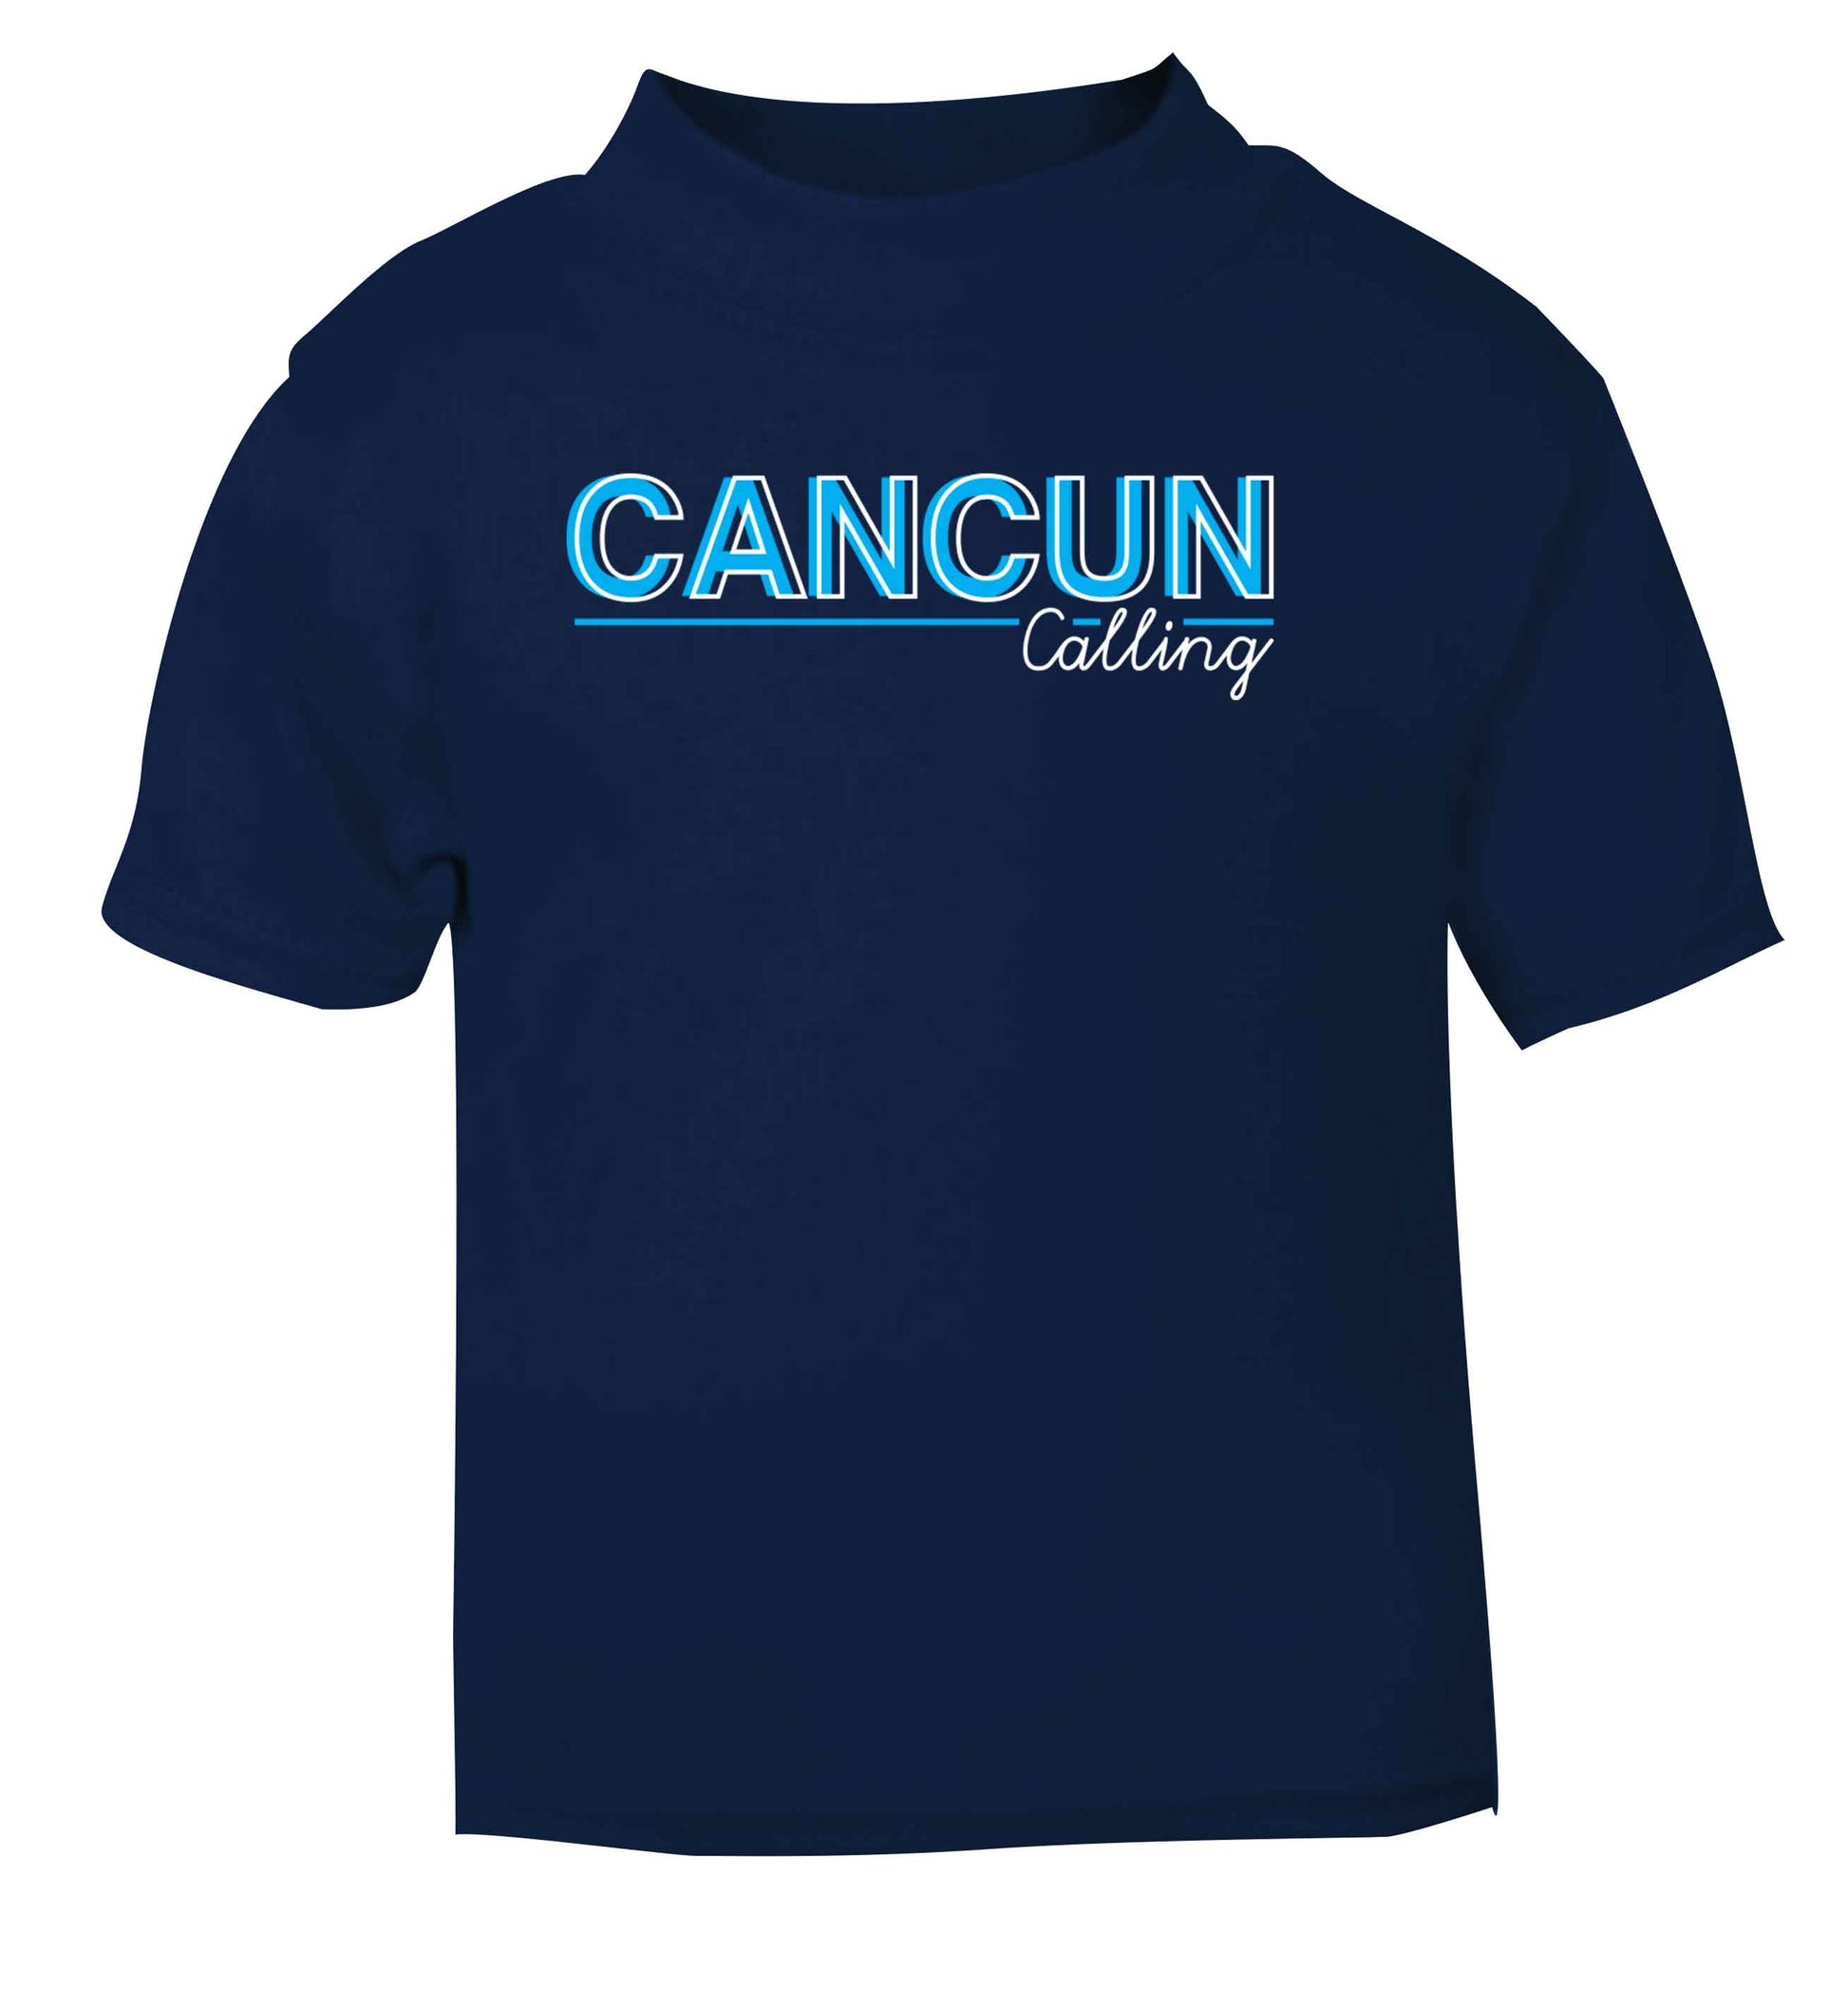 Cancun calling navy Baby Toddler Tshirt 2 Years